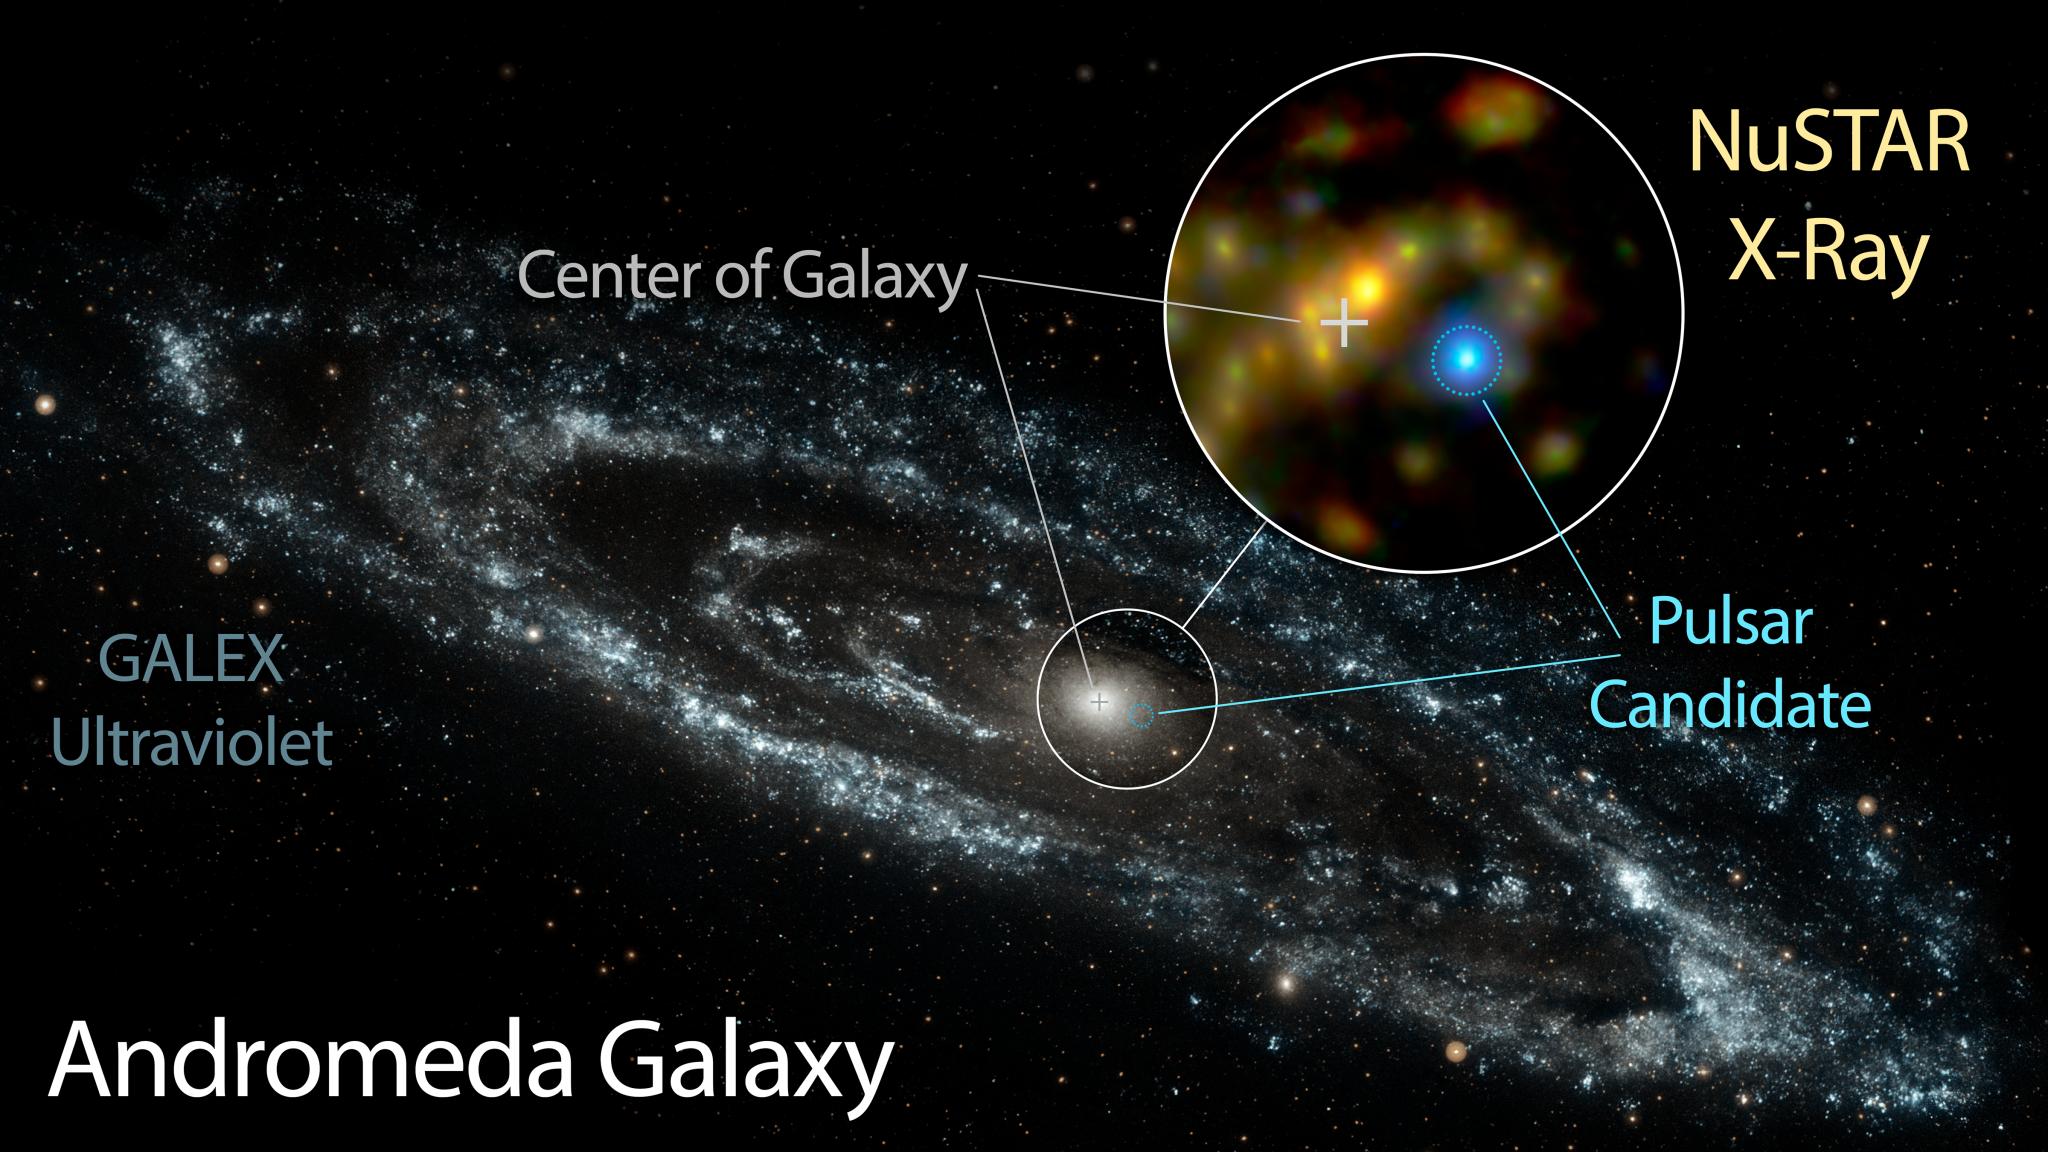 PIA20970 - Pulsar Candidate in Andromeda